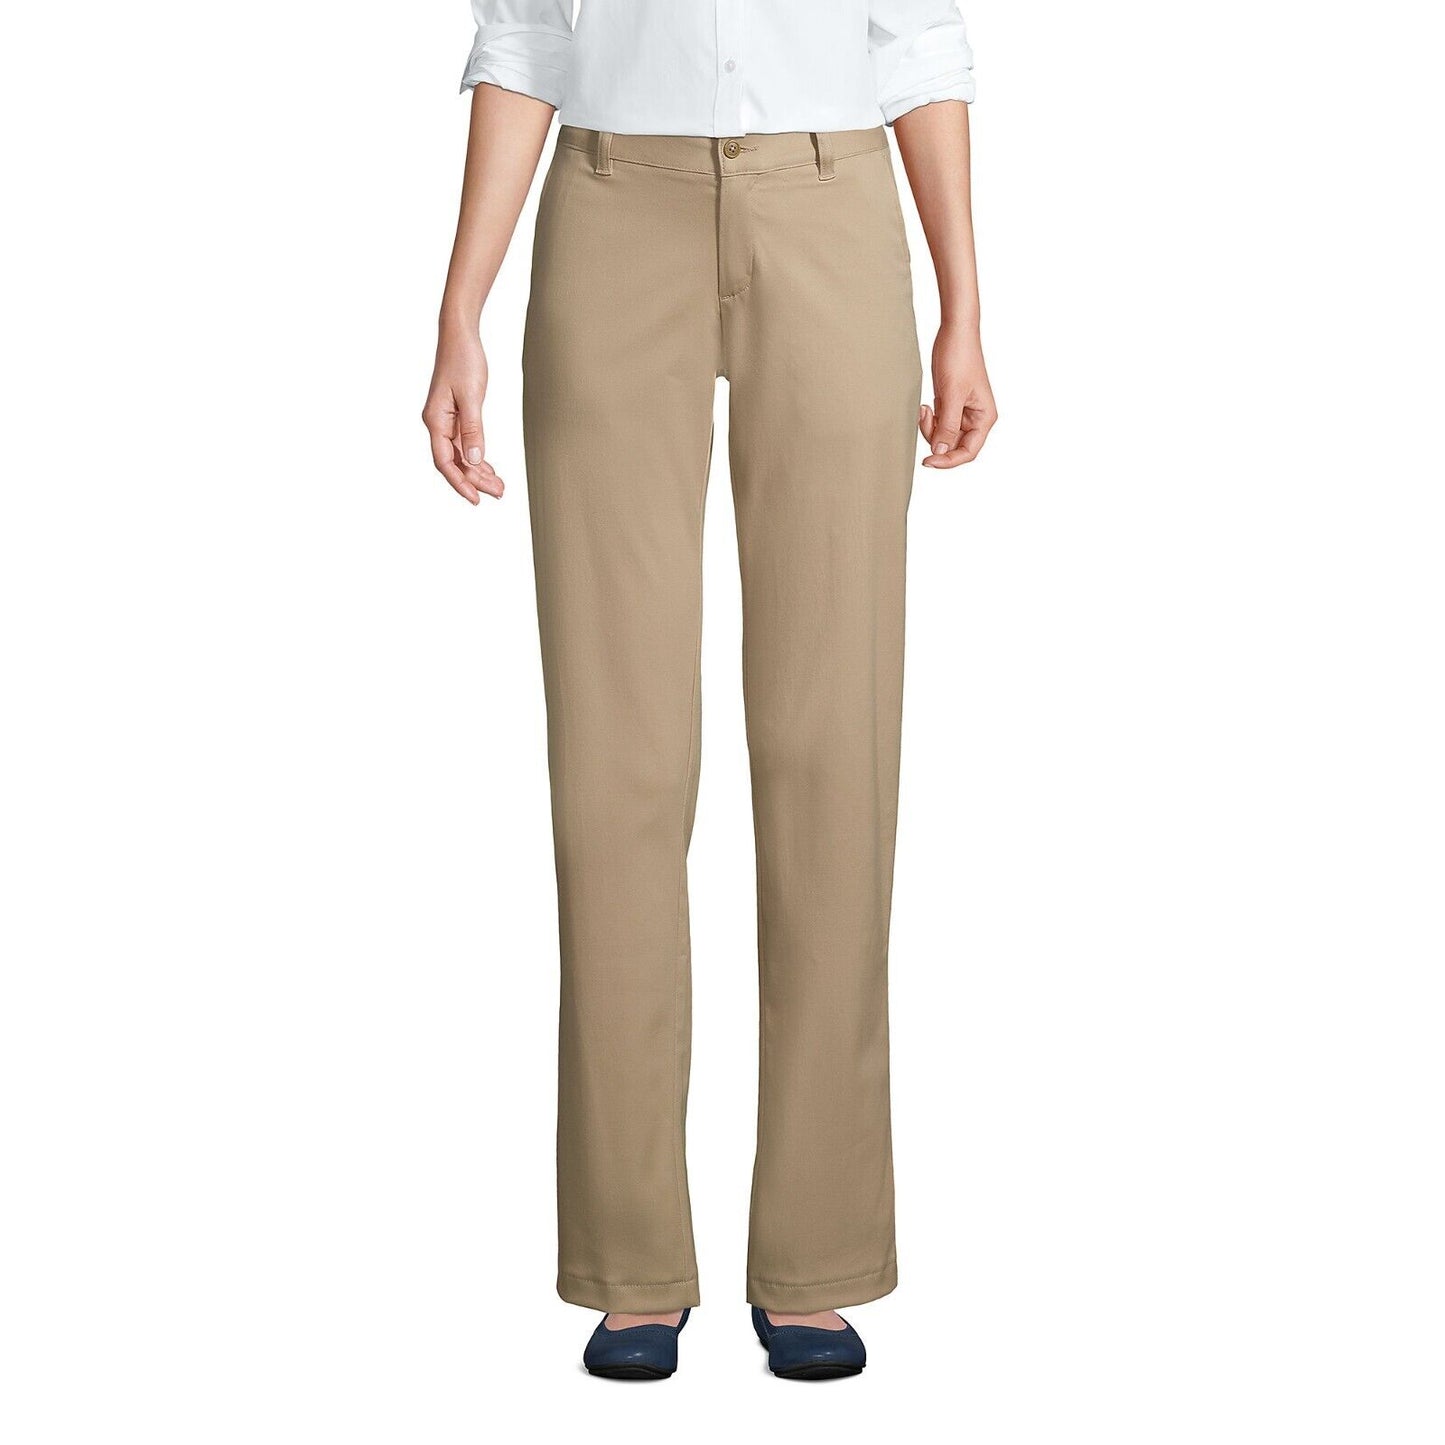 Women's Plain Front Stretch Chino Pants size 0